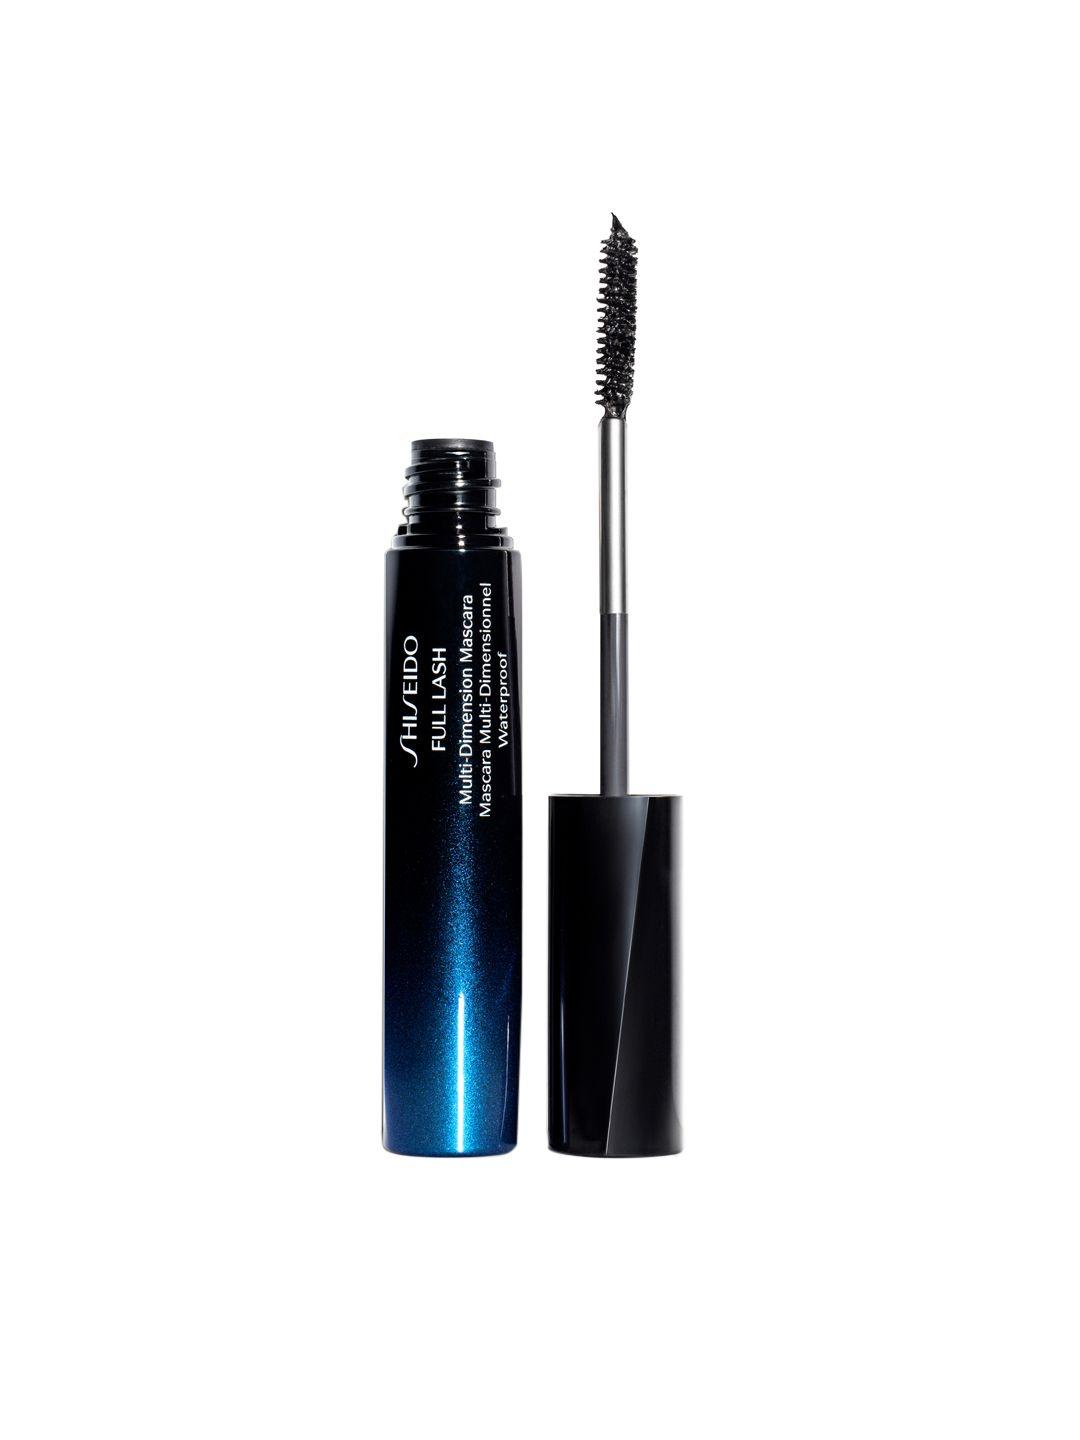 shiseido full lash multi-dimension waterproof mascara bk901